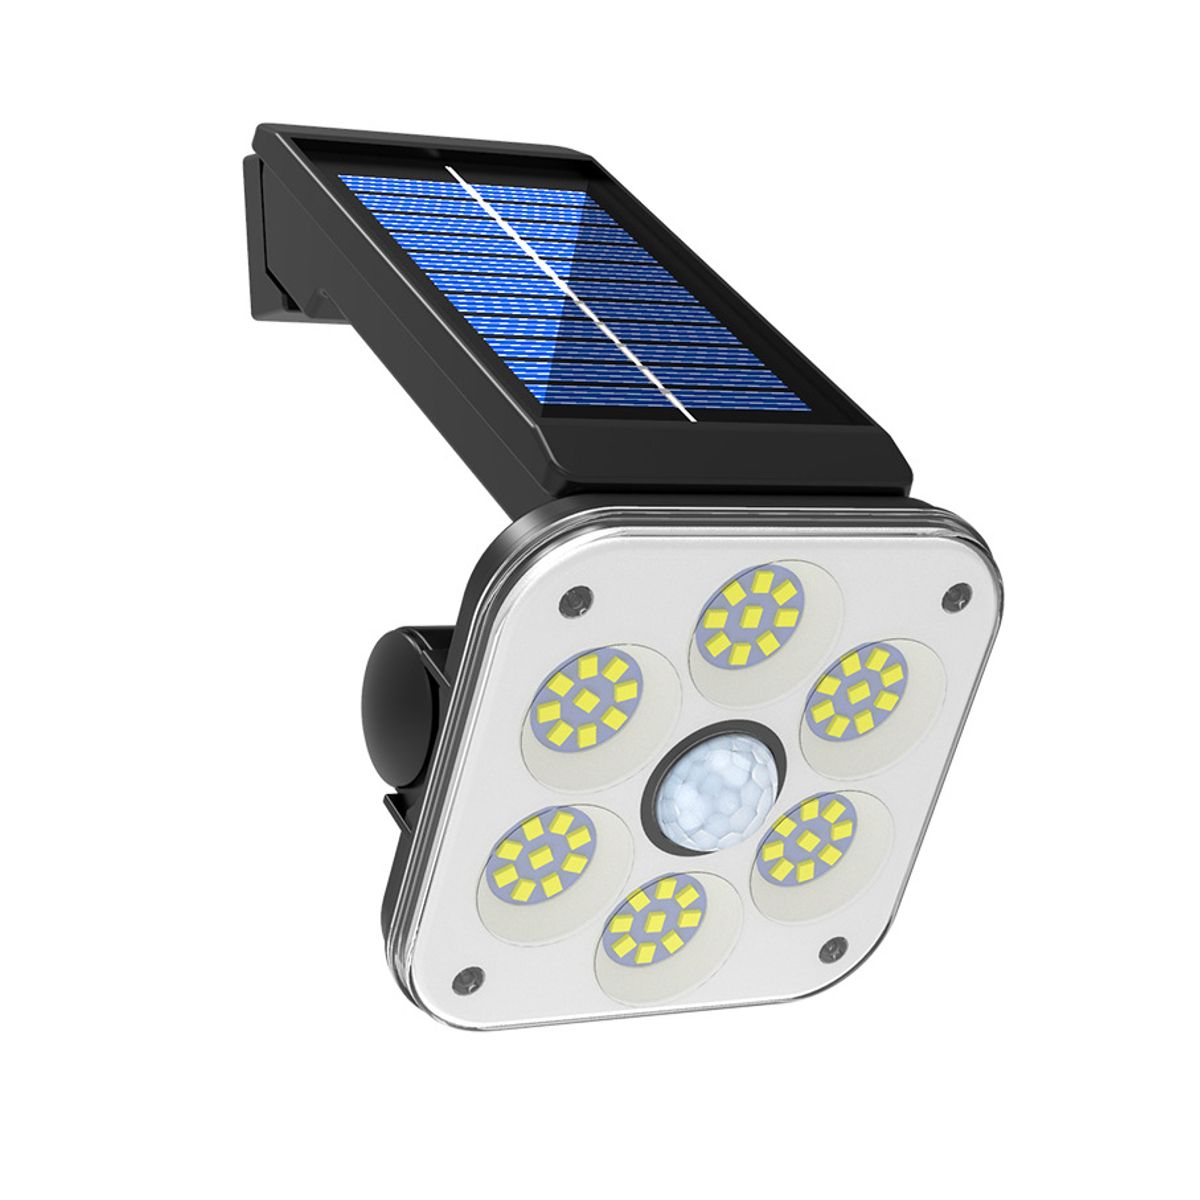 54SMD-Solar-Motion-Sensor-Lights-Security-Wall-Lamp-Floodlight-Outdoor-Waterproof-1756508